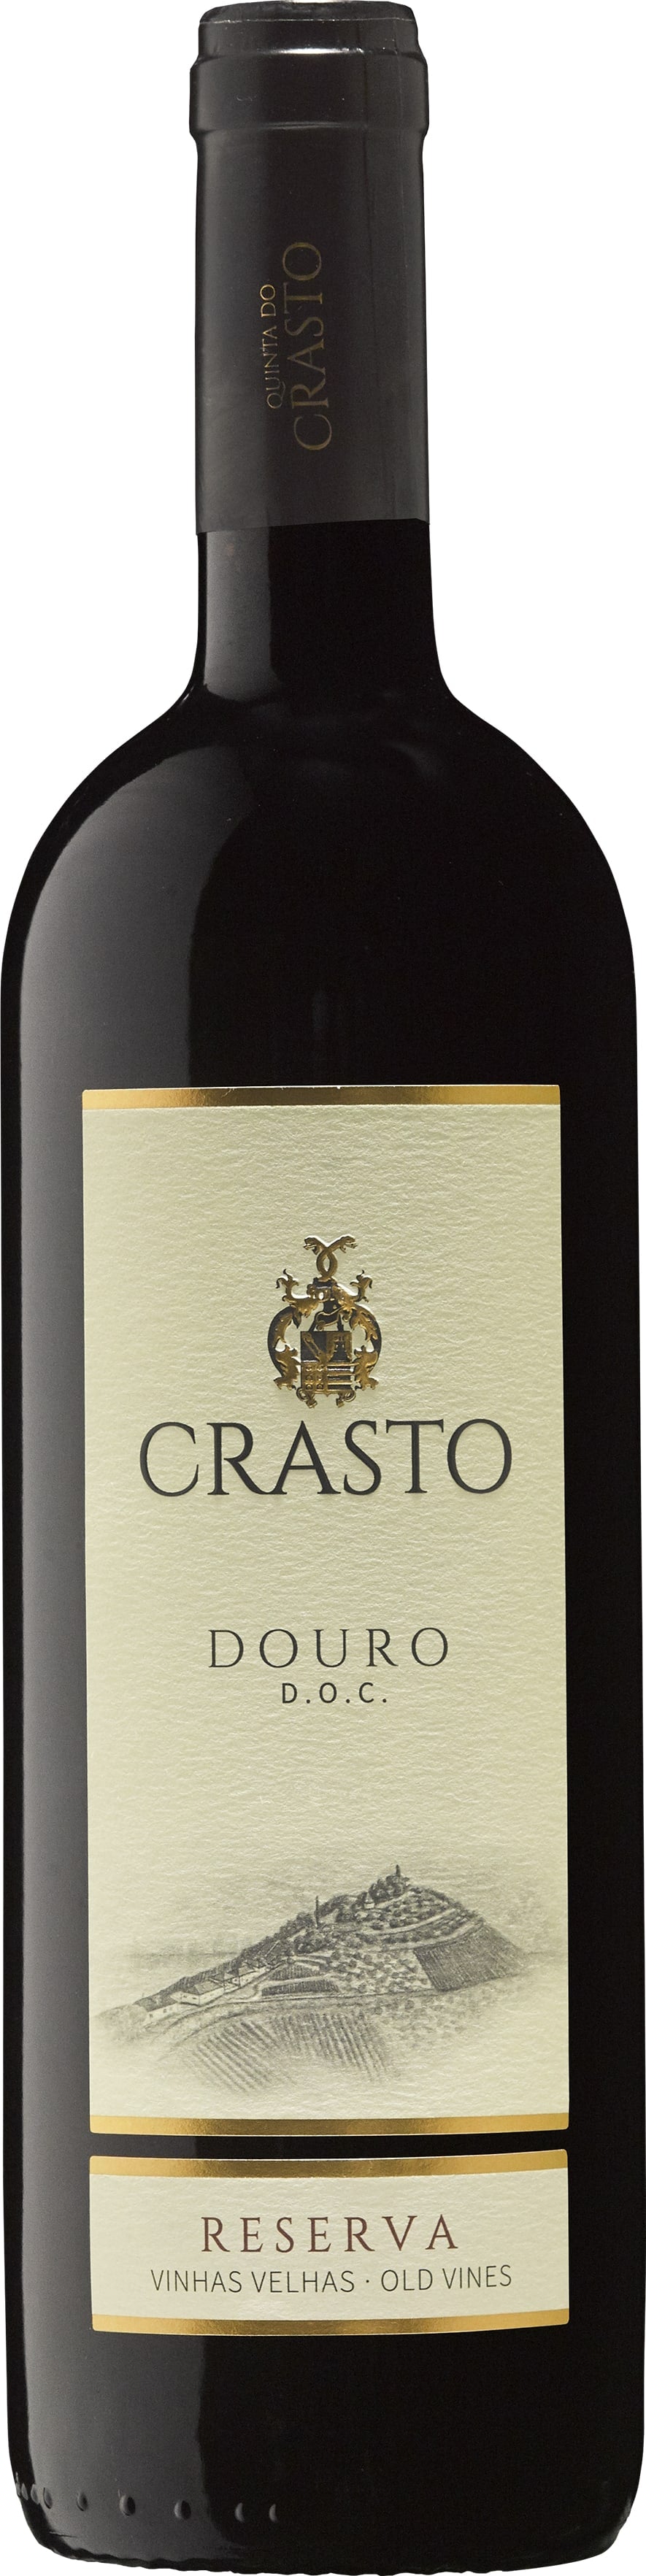 Quinta Do Crasto Old Vines Reserva 375cl 2021 37.5cl - Buy Quinta Do Crasto Wines from GREAT WINES DIRECT wine shop